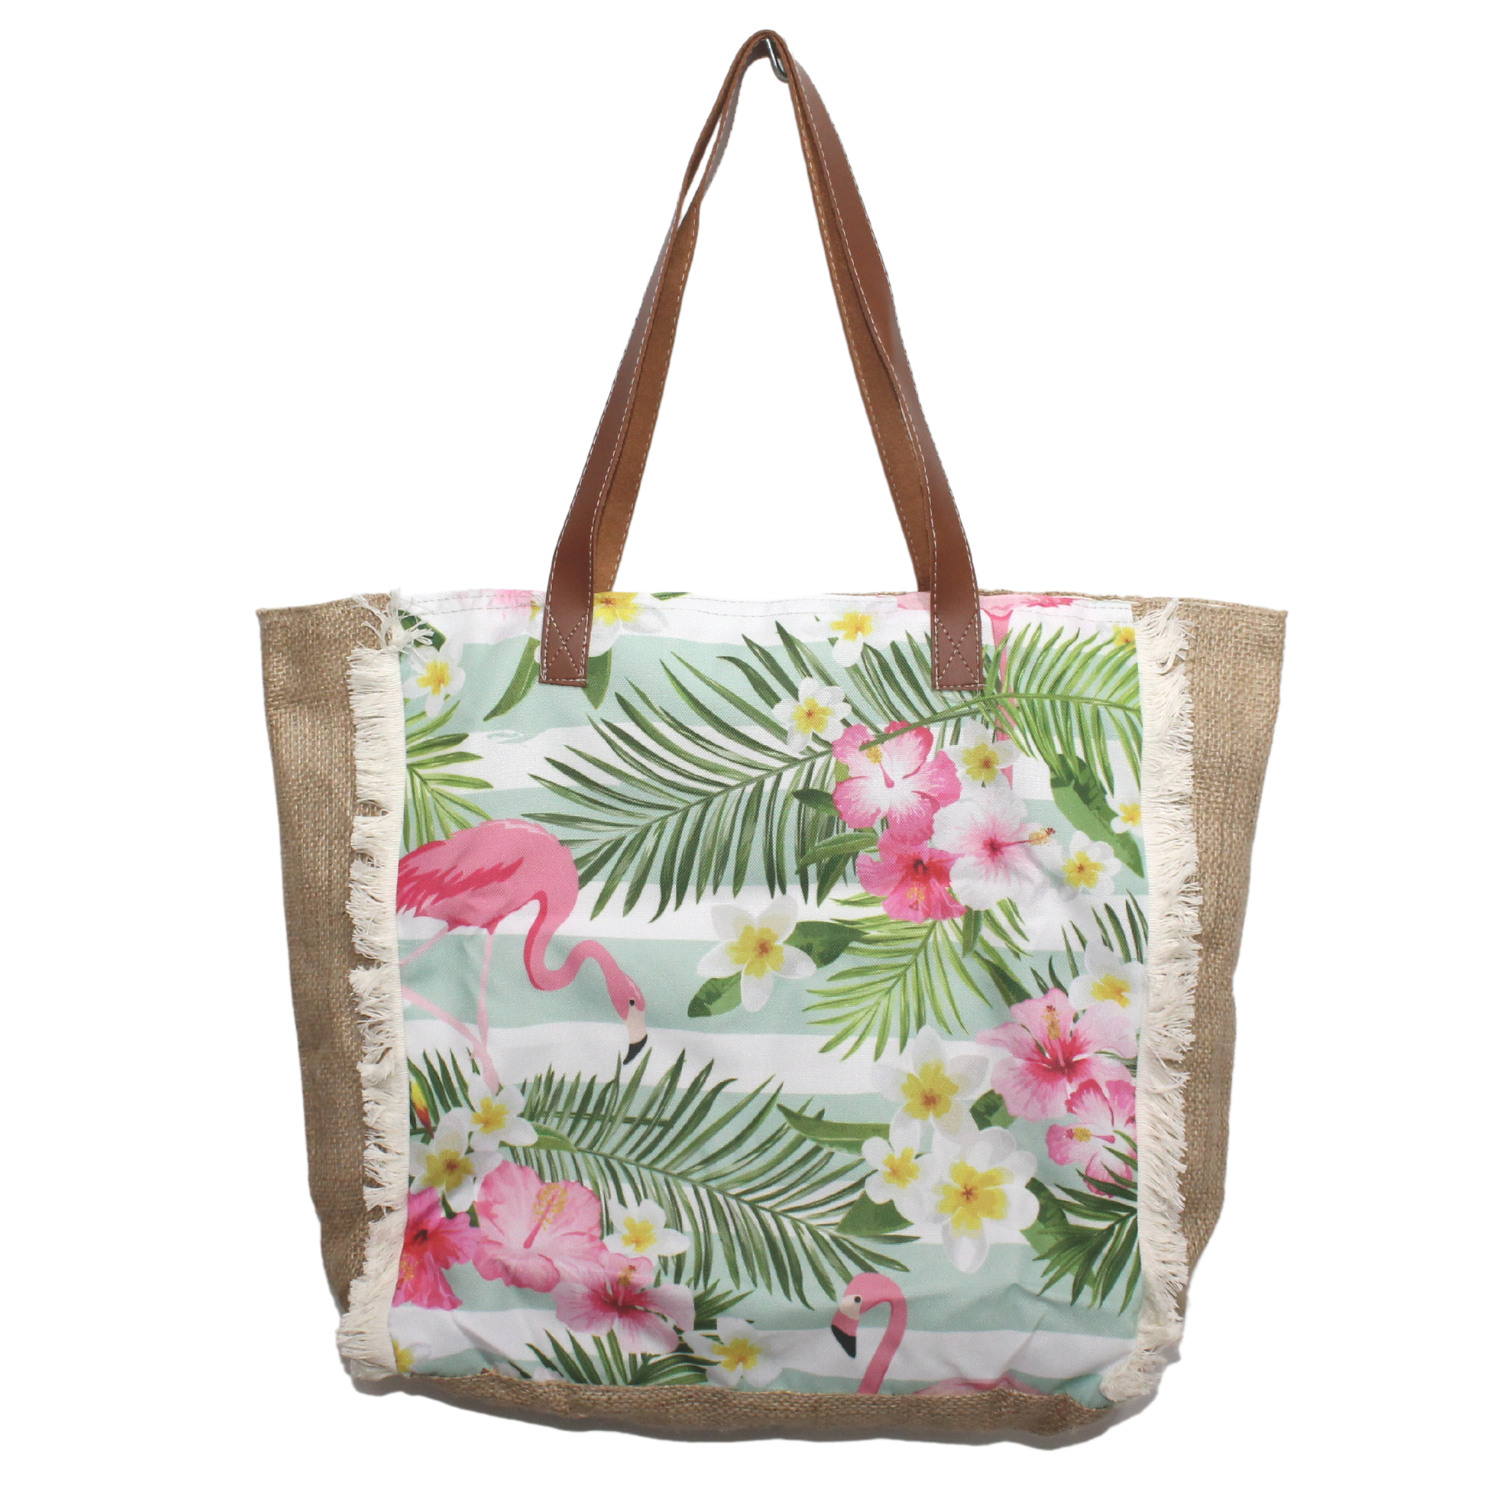 Flamingos Beach Shopping / Tote Bag Zip Up Tropical Print Hessian Free Clutch